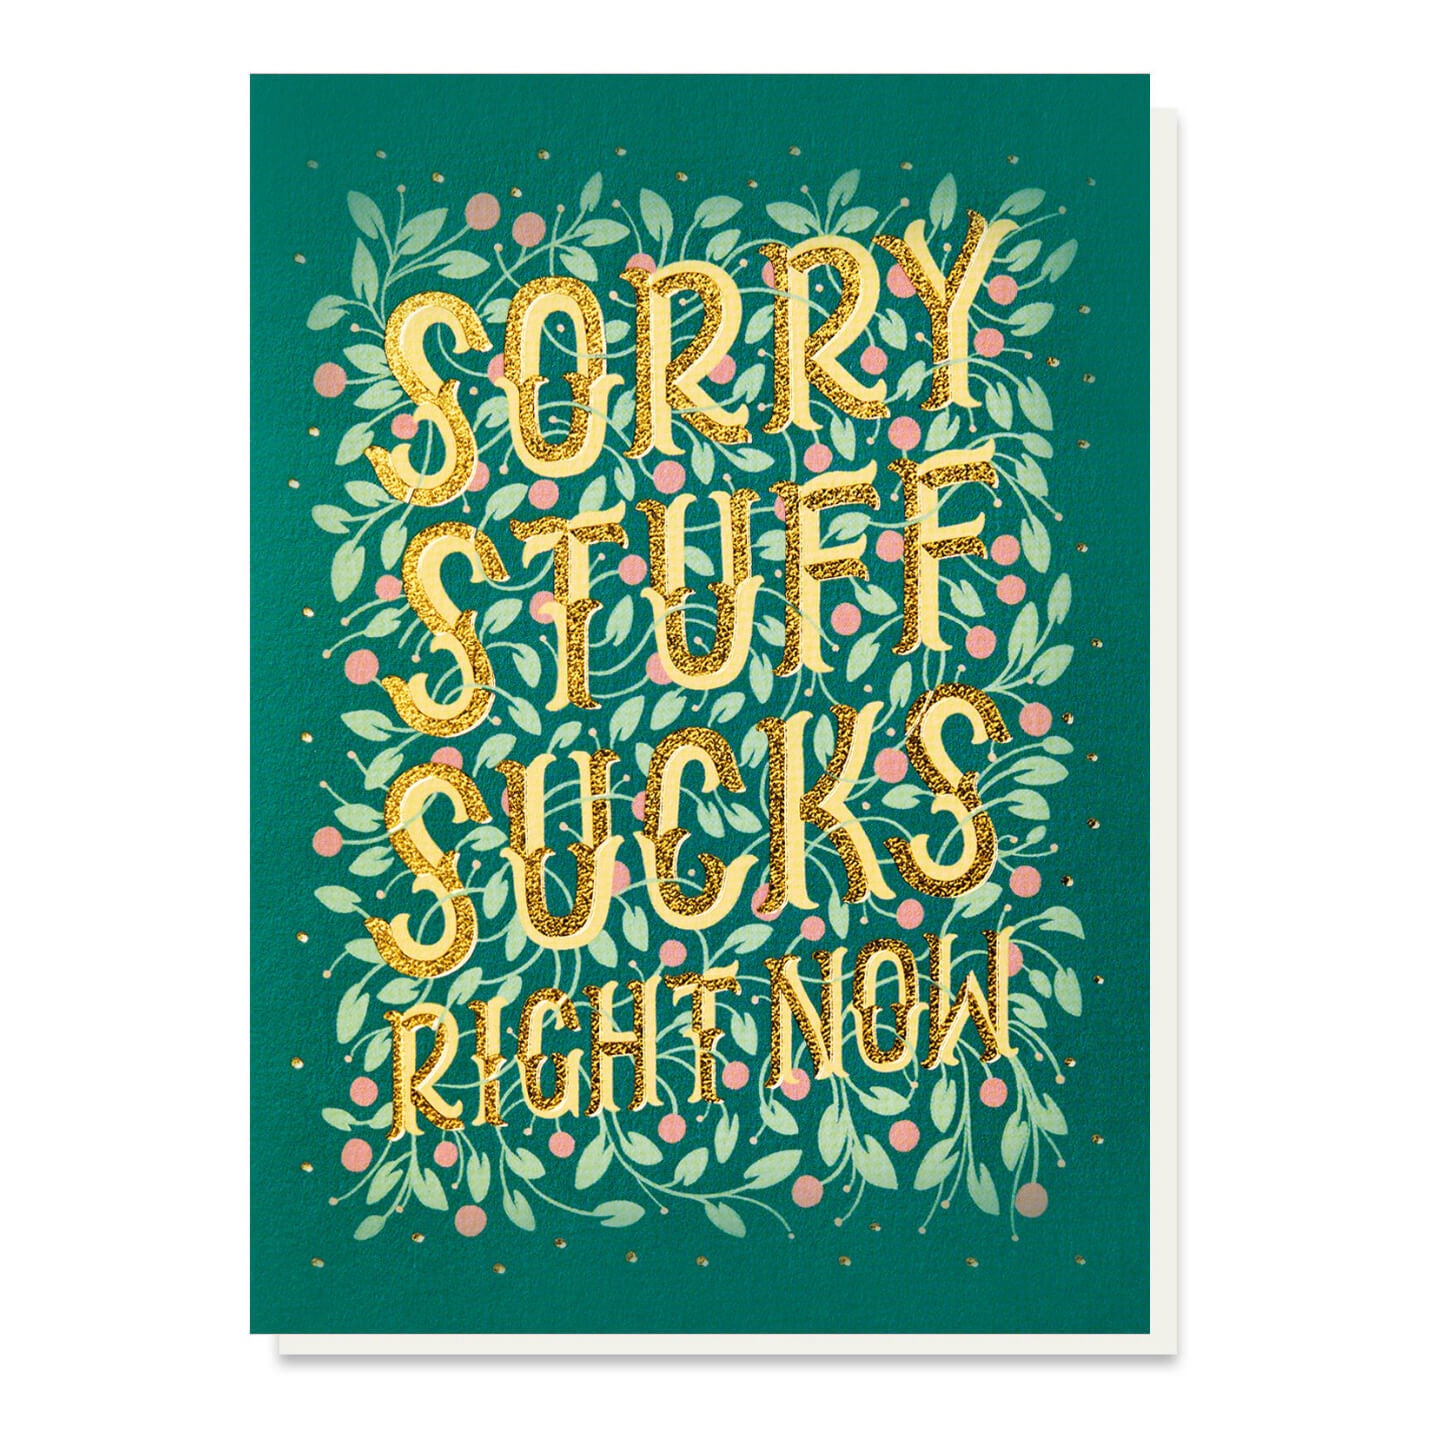 Sorry Stuff Sucks Greetings Card